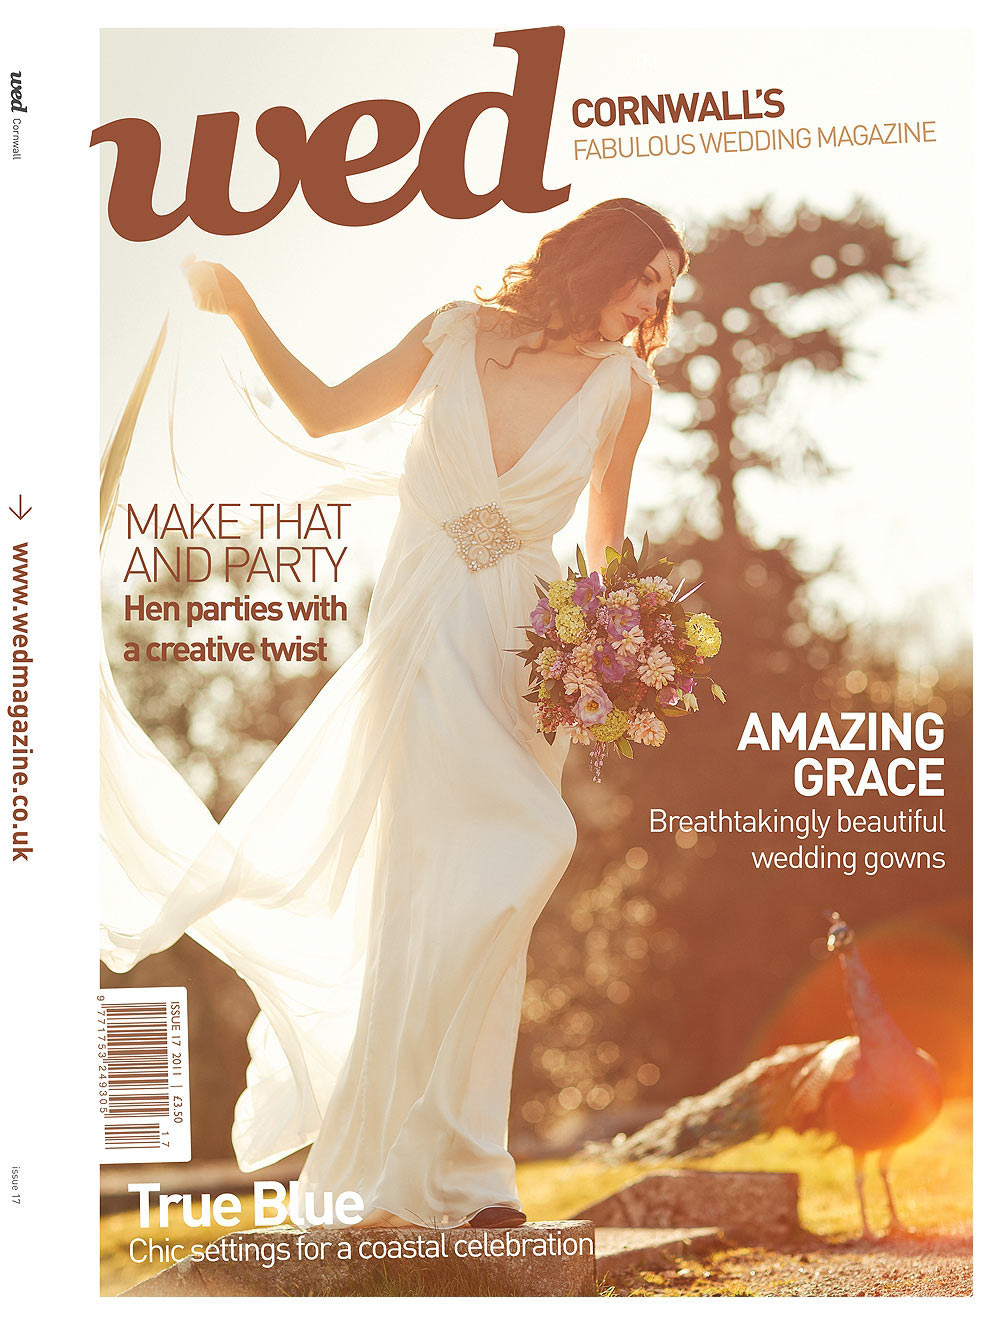 Cornwall Wed Magazine - Issue 17